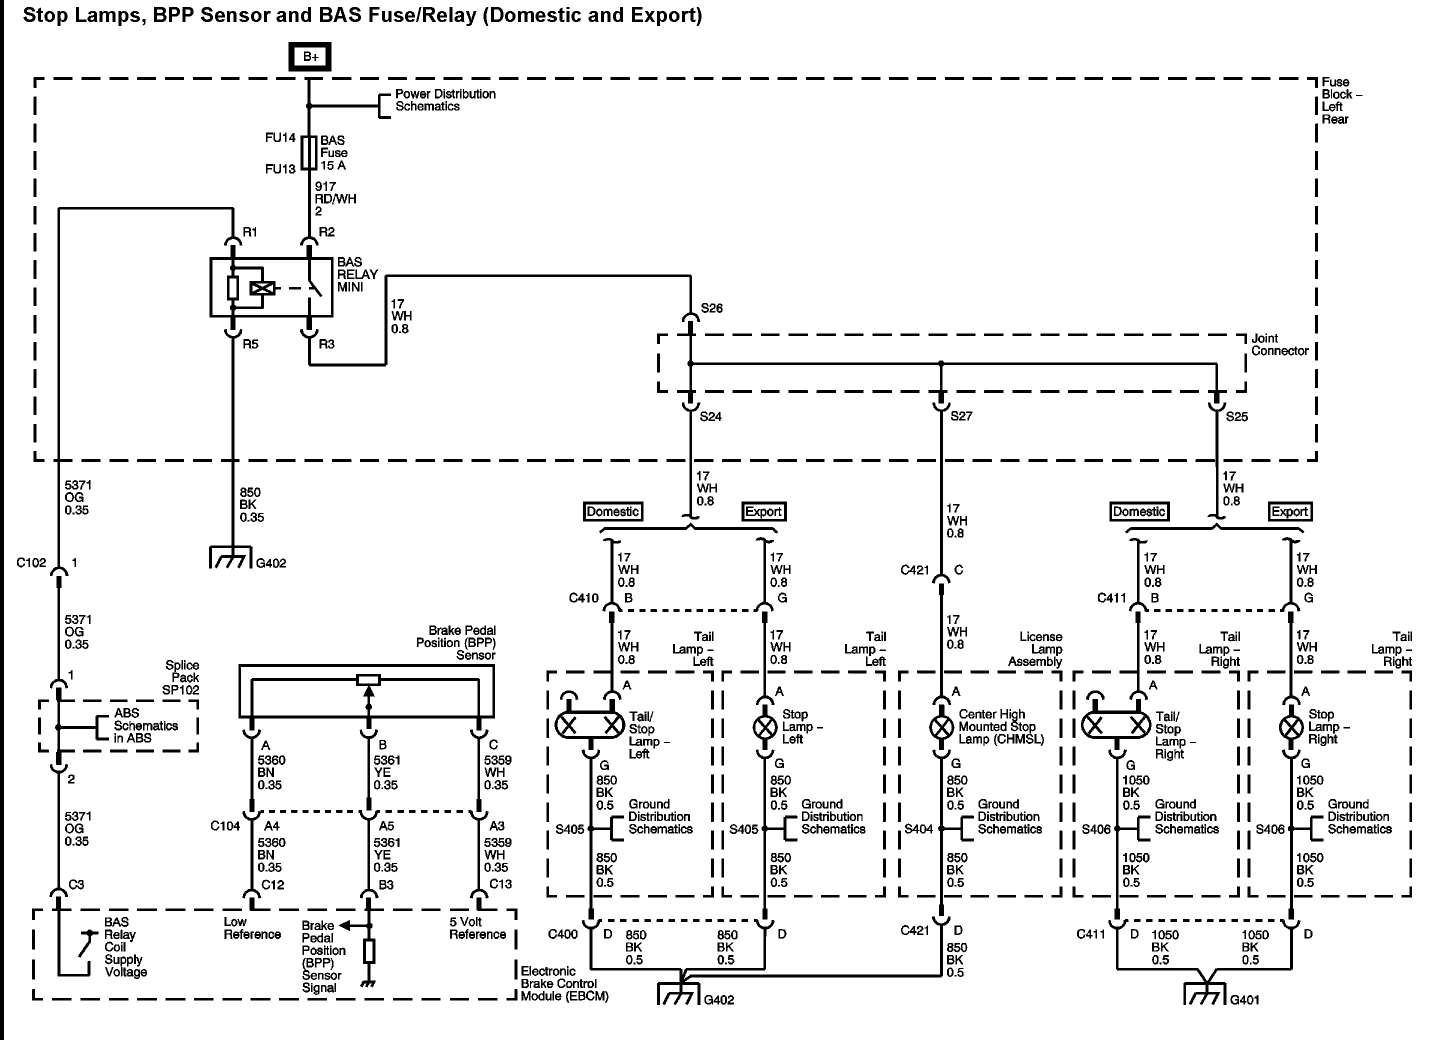 Wiring Schematic For A 2000 Cadillac Escalade - Wiring Diagram Schemas